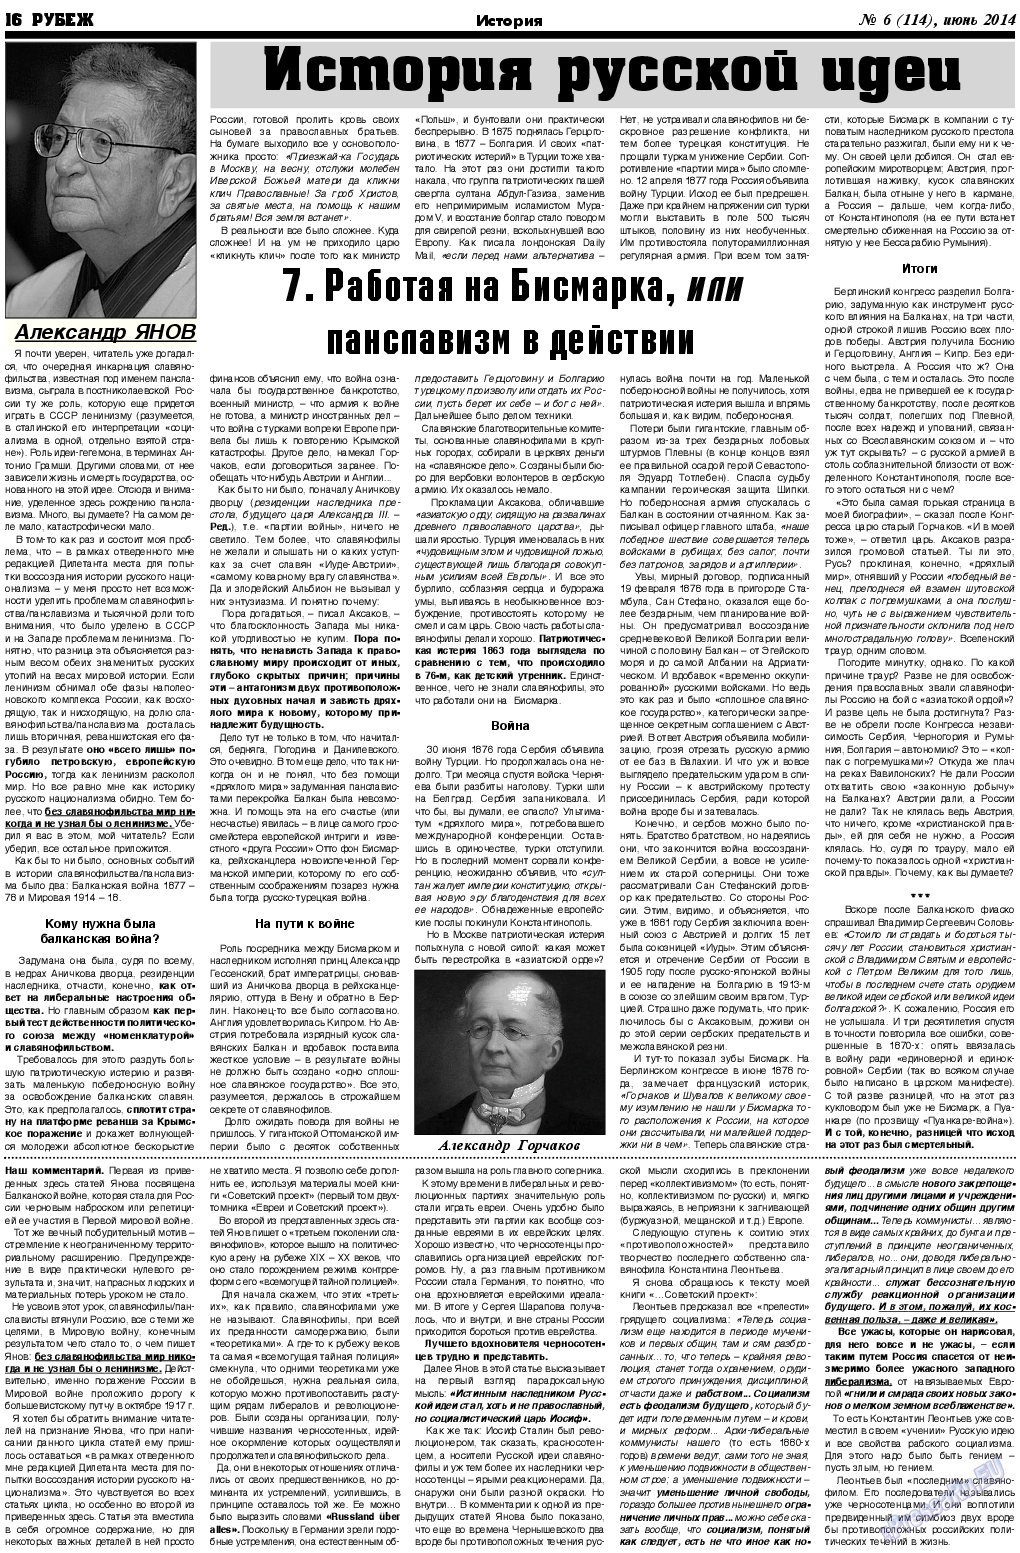 Рубеж, газета. 2014 №6 стр.16